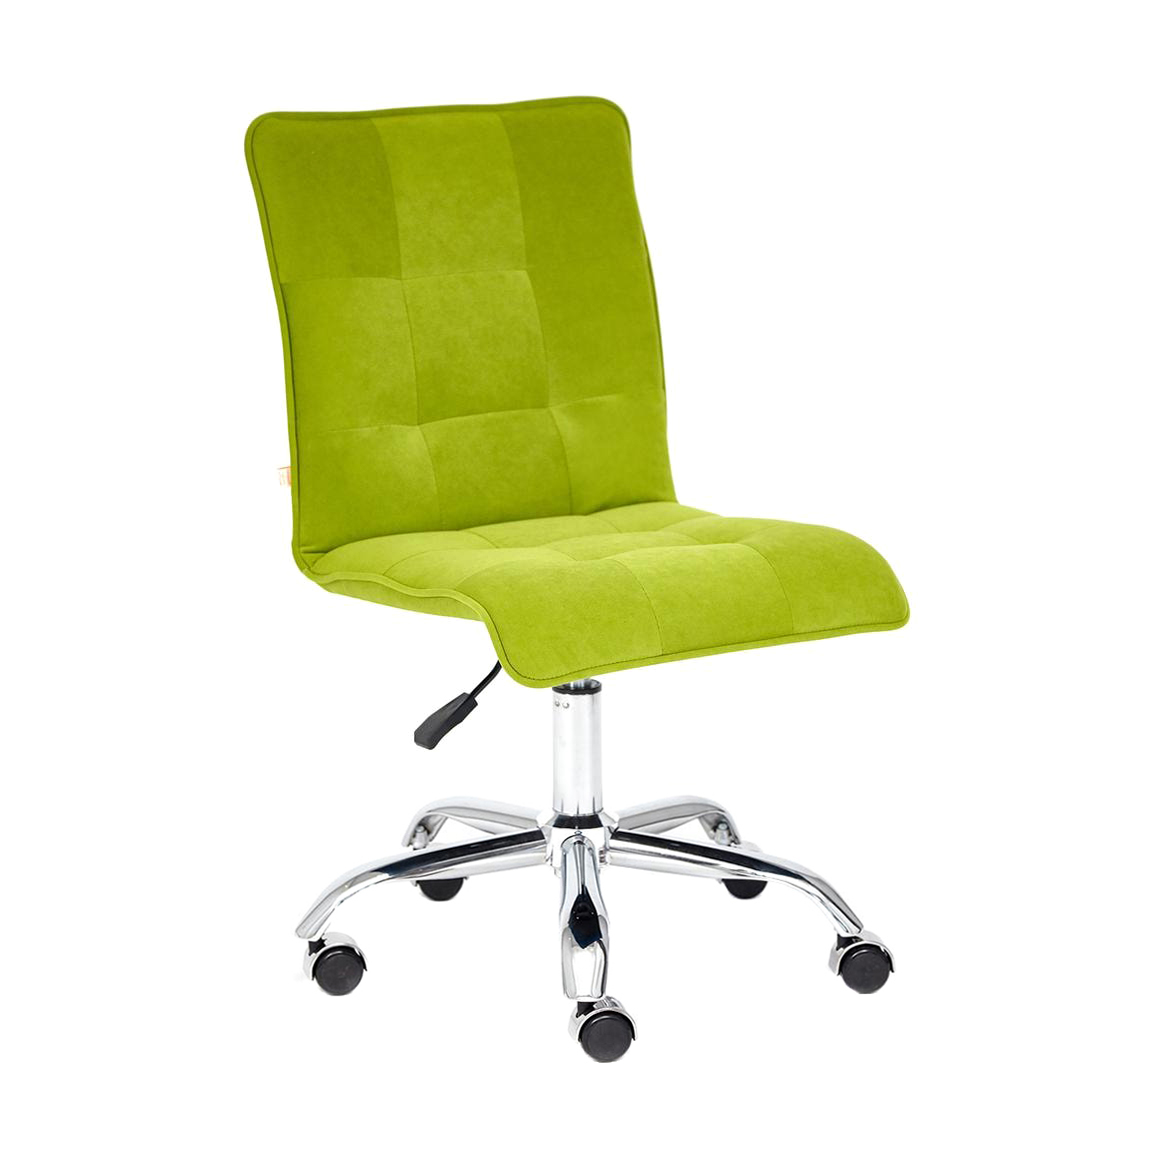 Кресло офисное TC до 100 кг 96х45х40 см оливковый кресло офисное tc до 100 кг 96х45х40 см синий